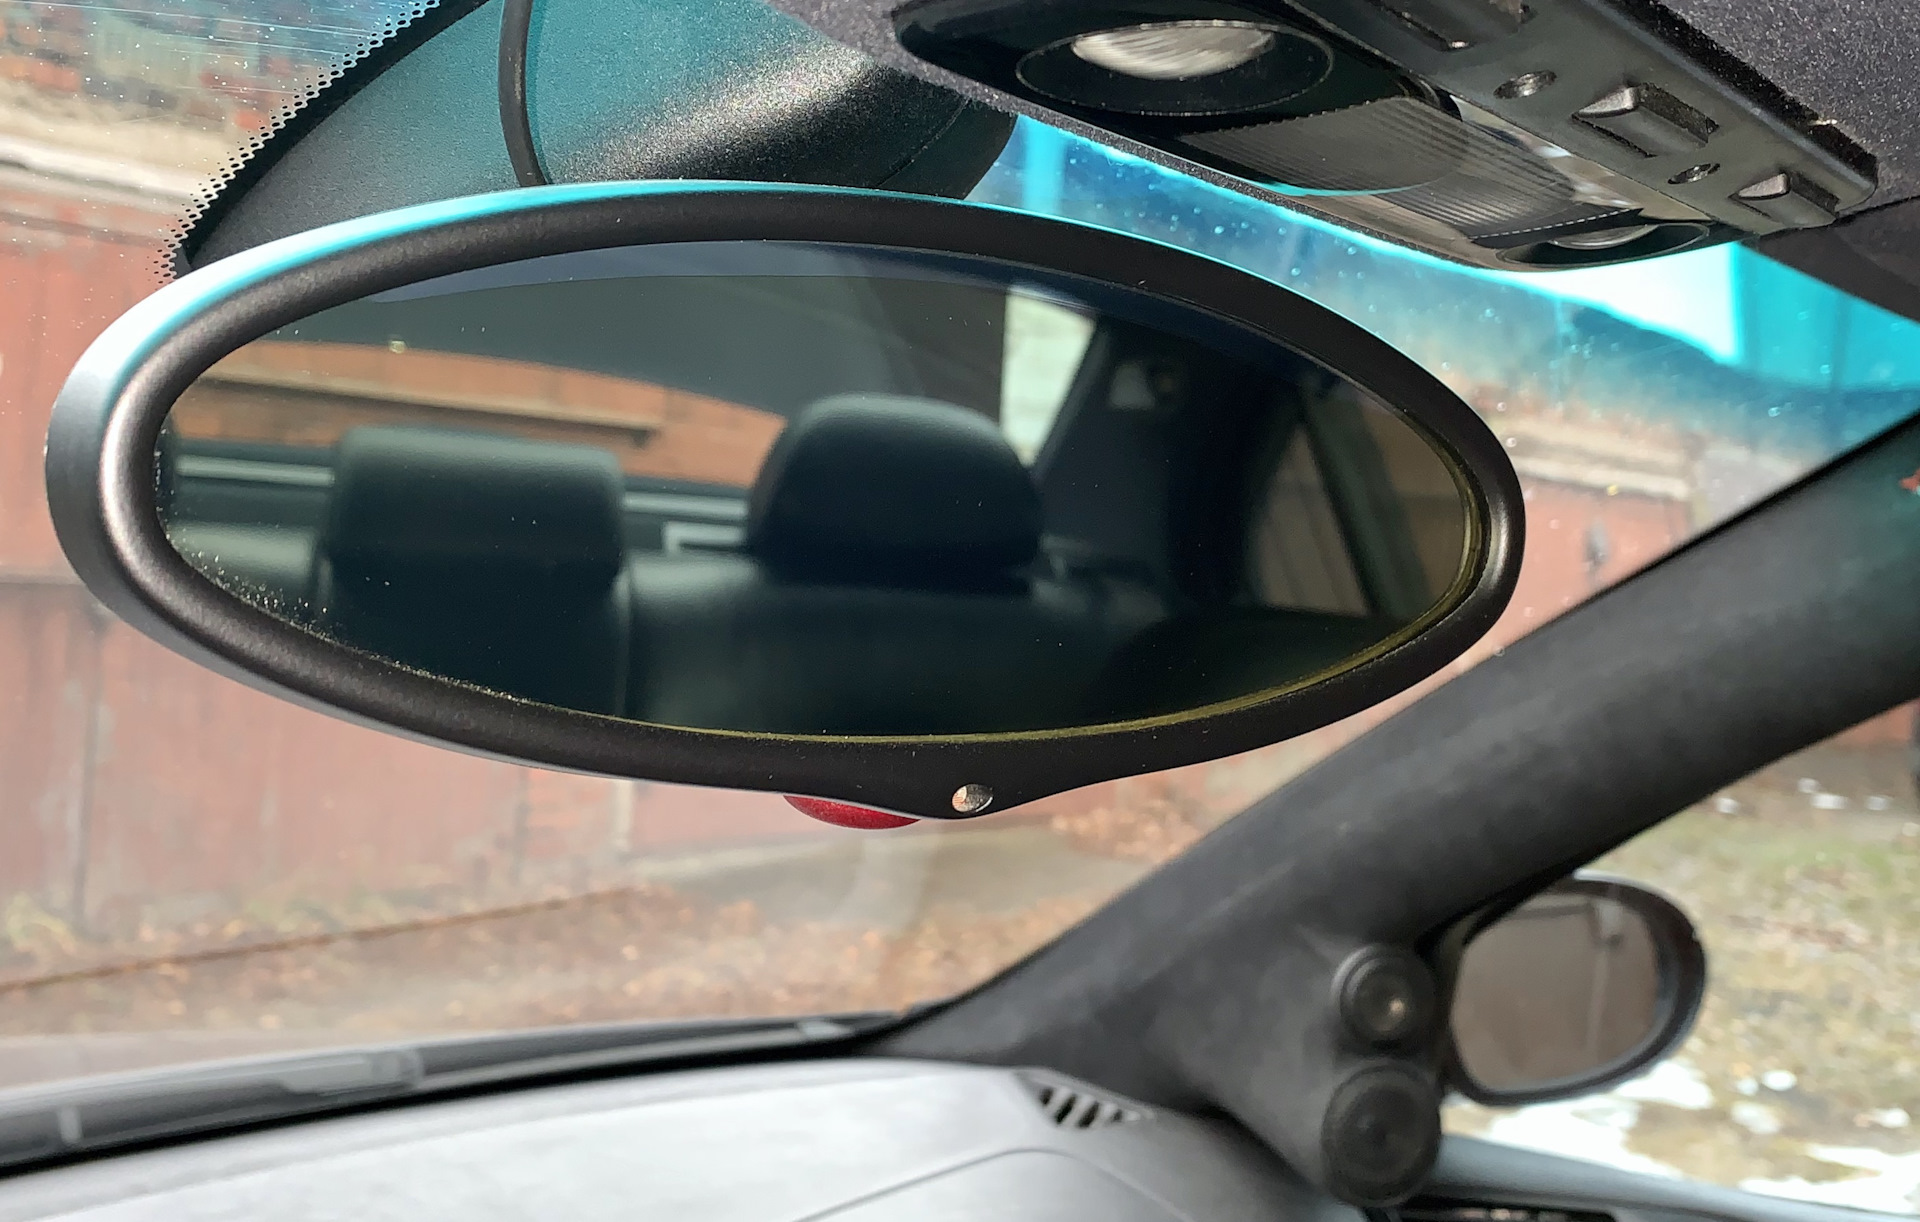 Автозатемнение зеркала заднего. Зеркало с автозатемнением Форд фокус 2. Е39 зеркало с автозатемнением. Салонное зеркало БМВ е39 м5.